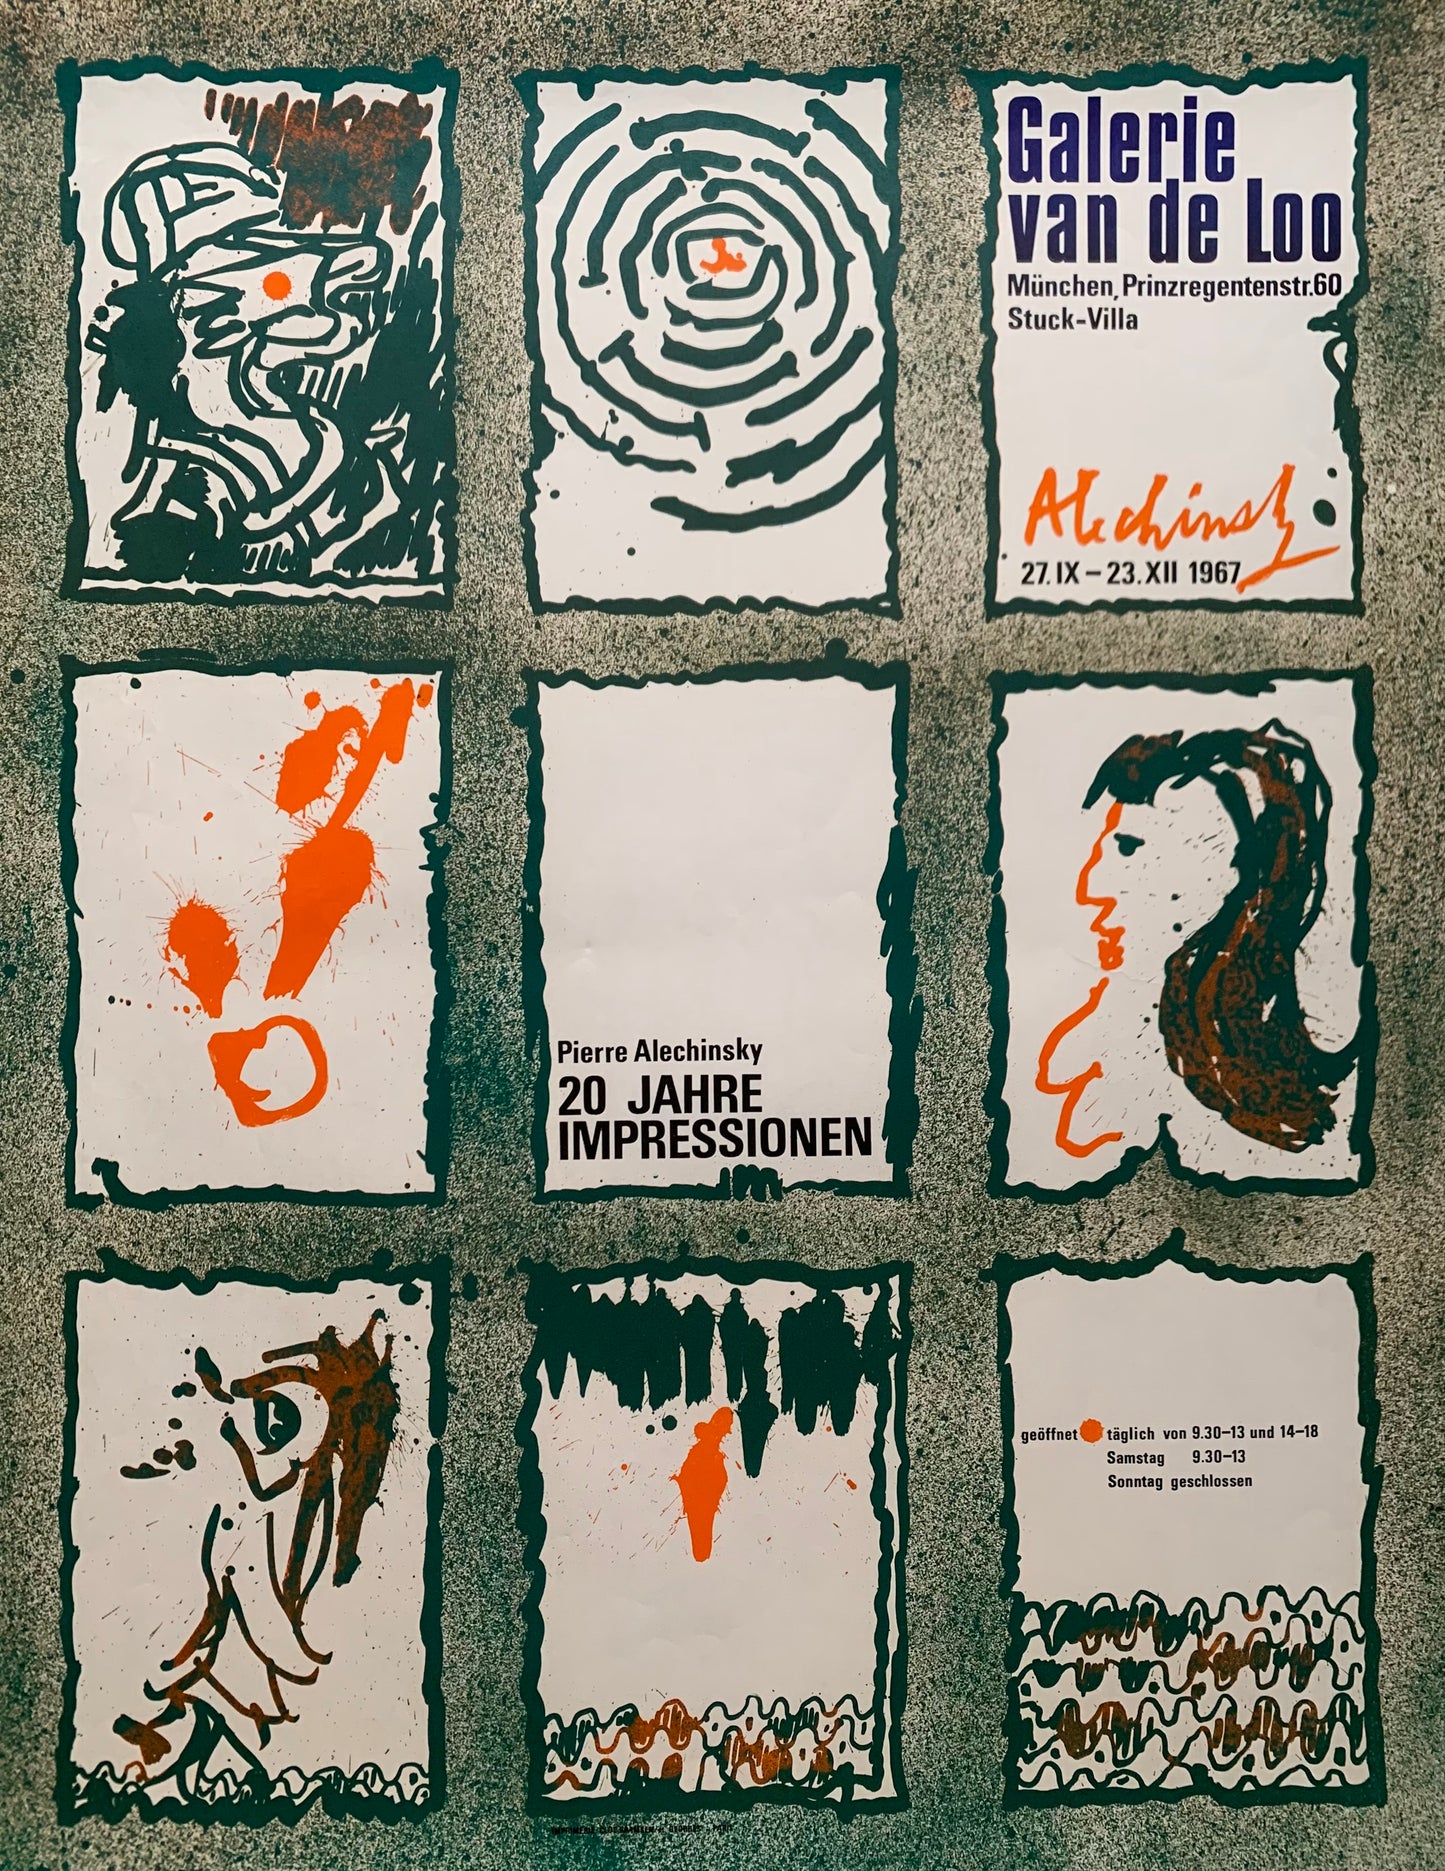 Pierre Alechinsky - exhibition poster, 1967